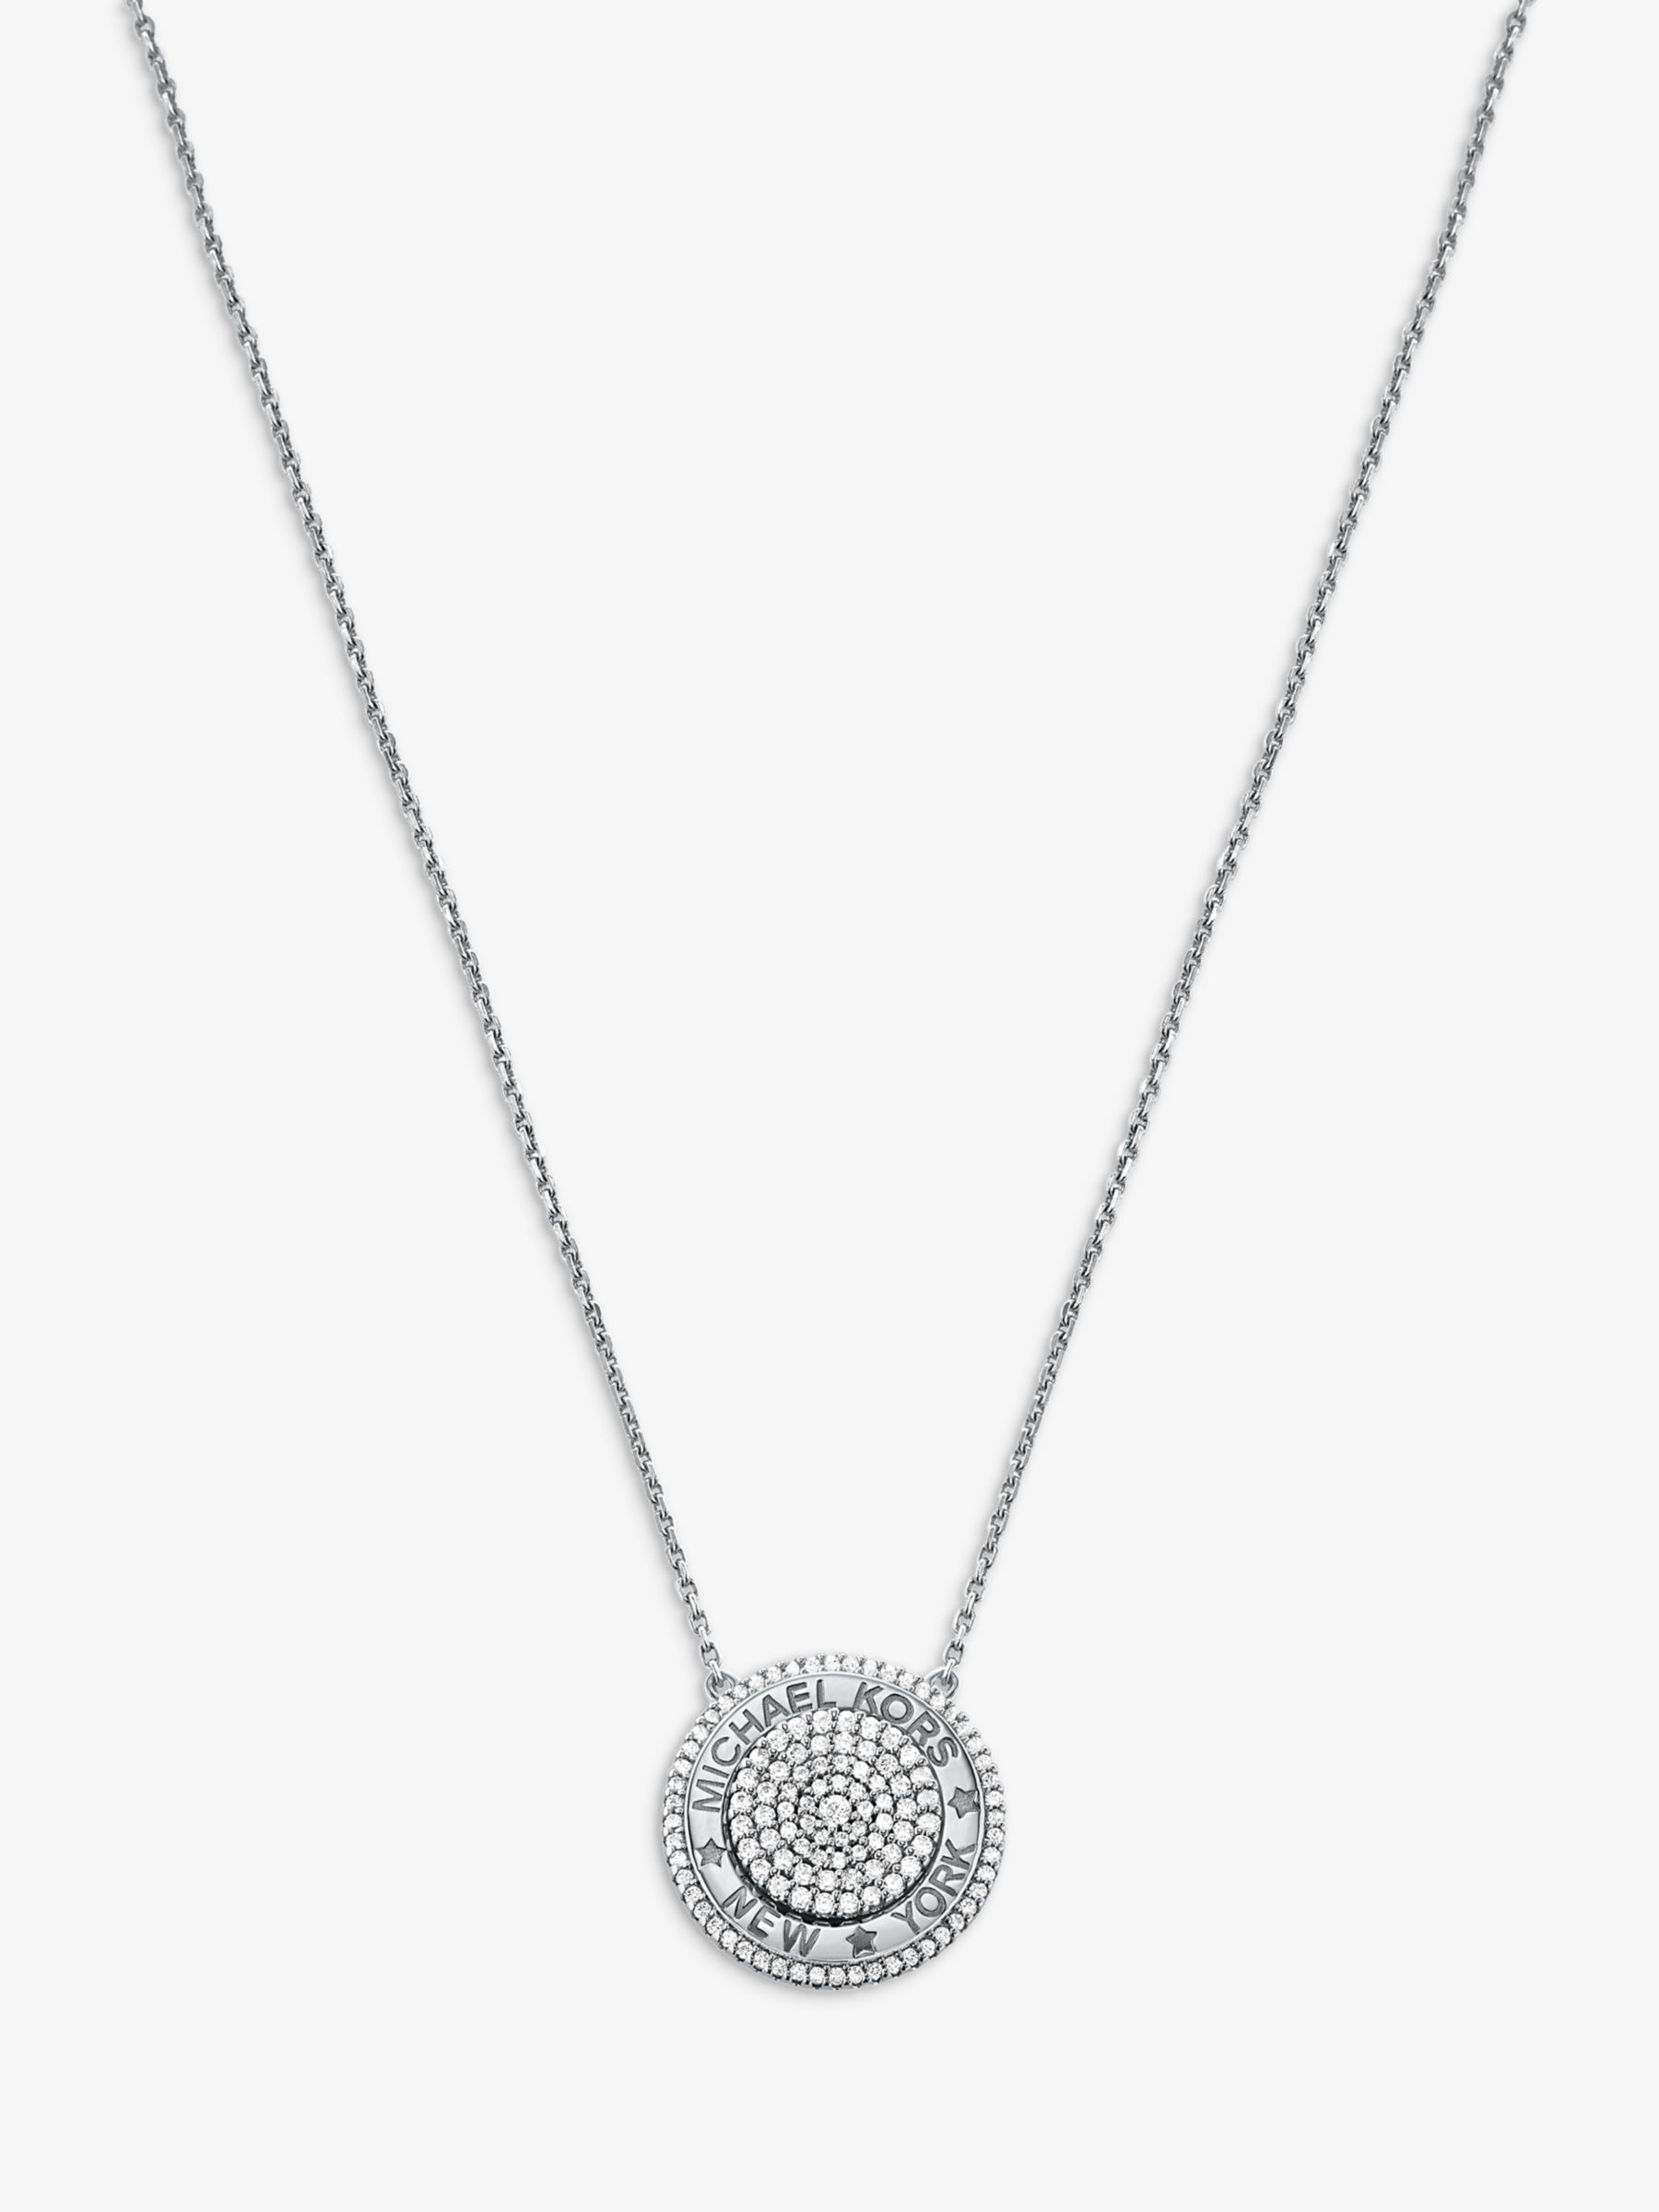 Michael Kors Cubic Zirconia Round Pendant Necklace, Silver